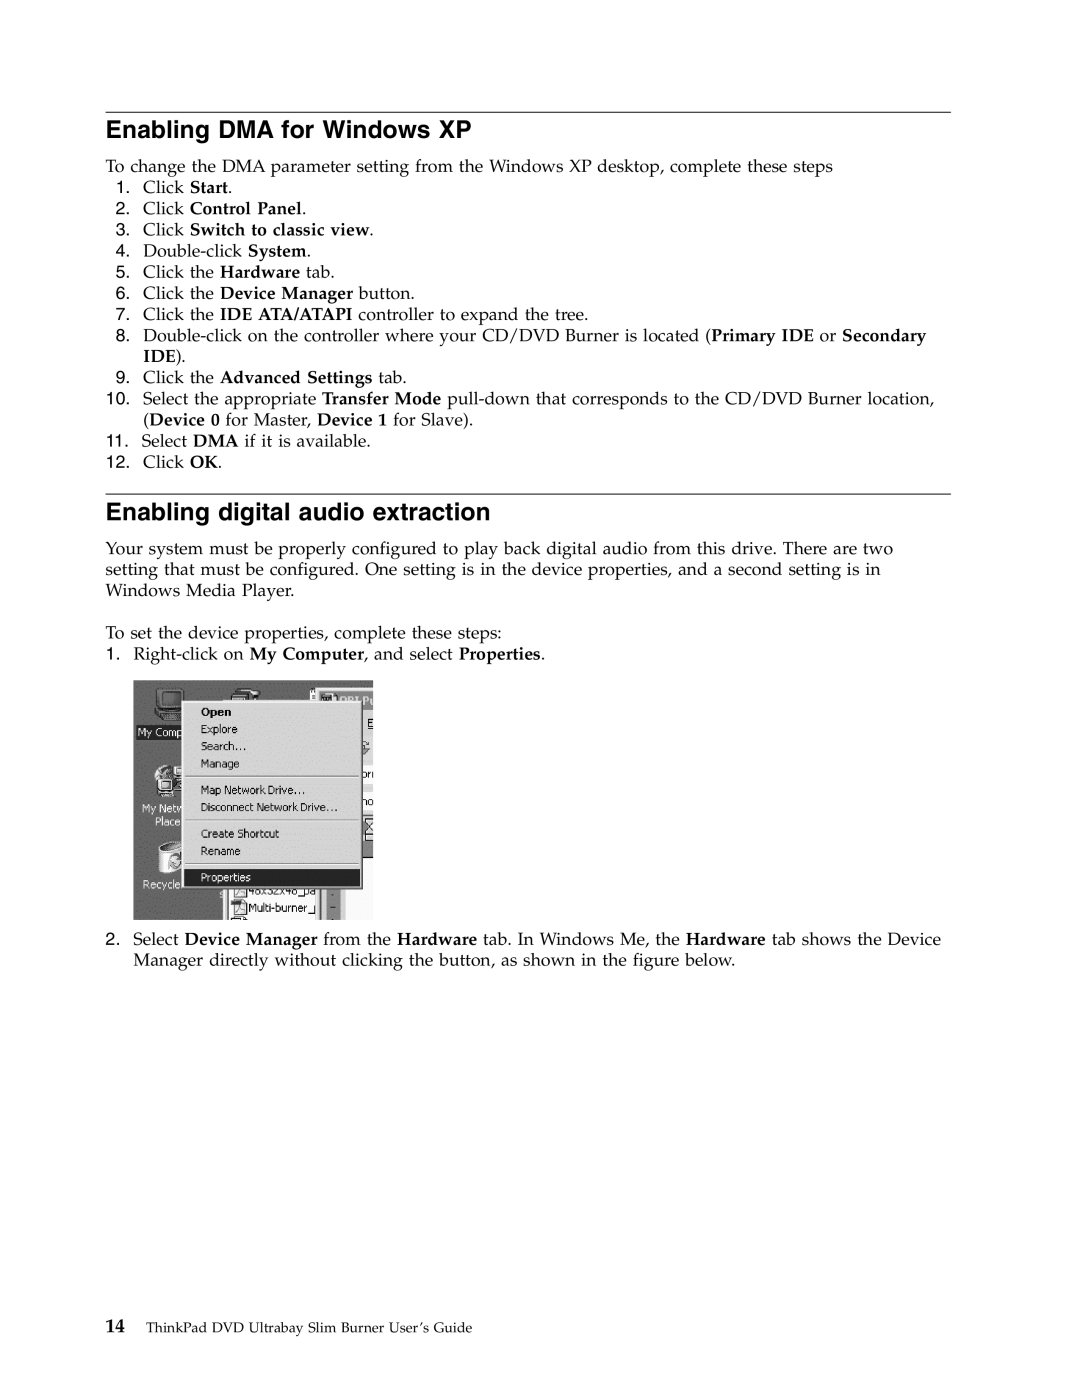 Lenovo 41N5647 manual Enabling DMA for Windows XP, Enabling digital audio extraction, Click Control Panel 